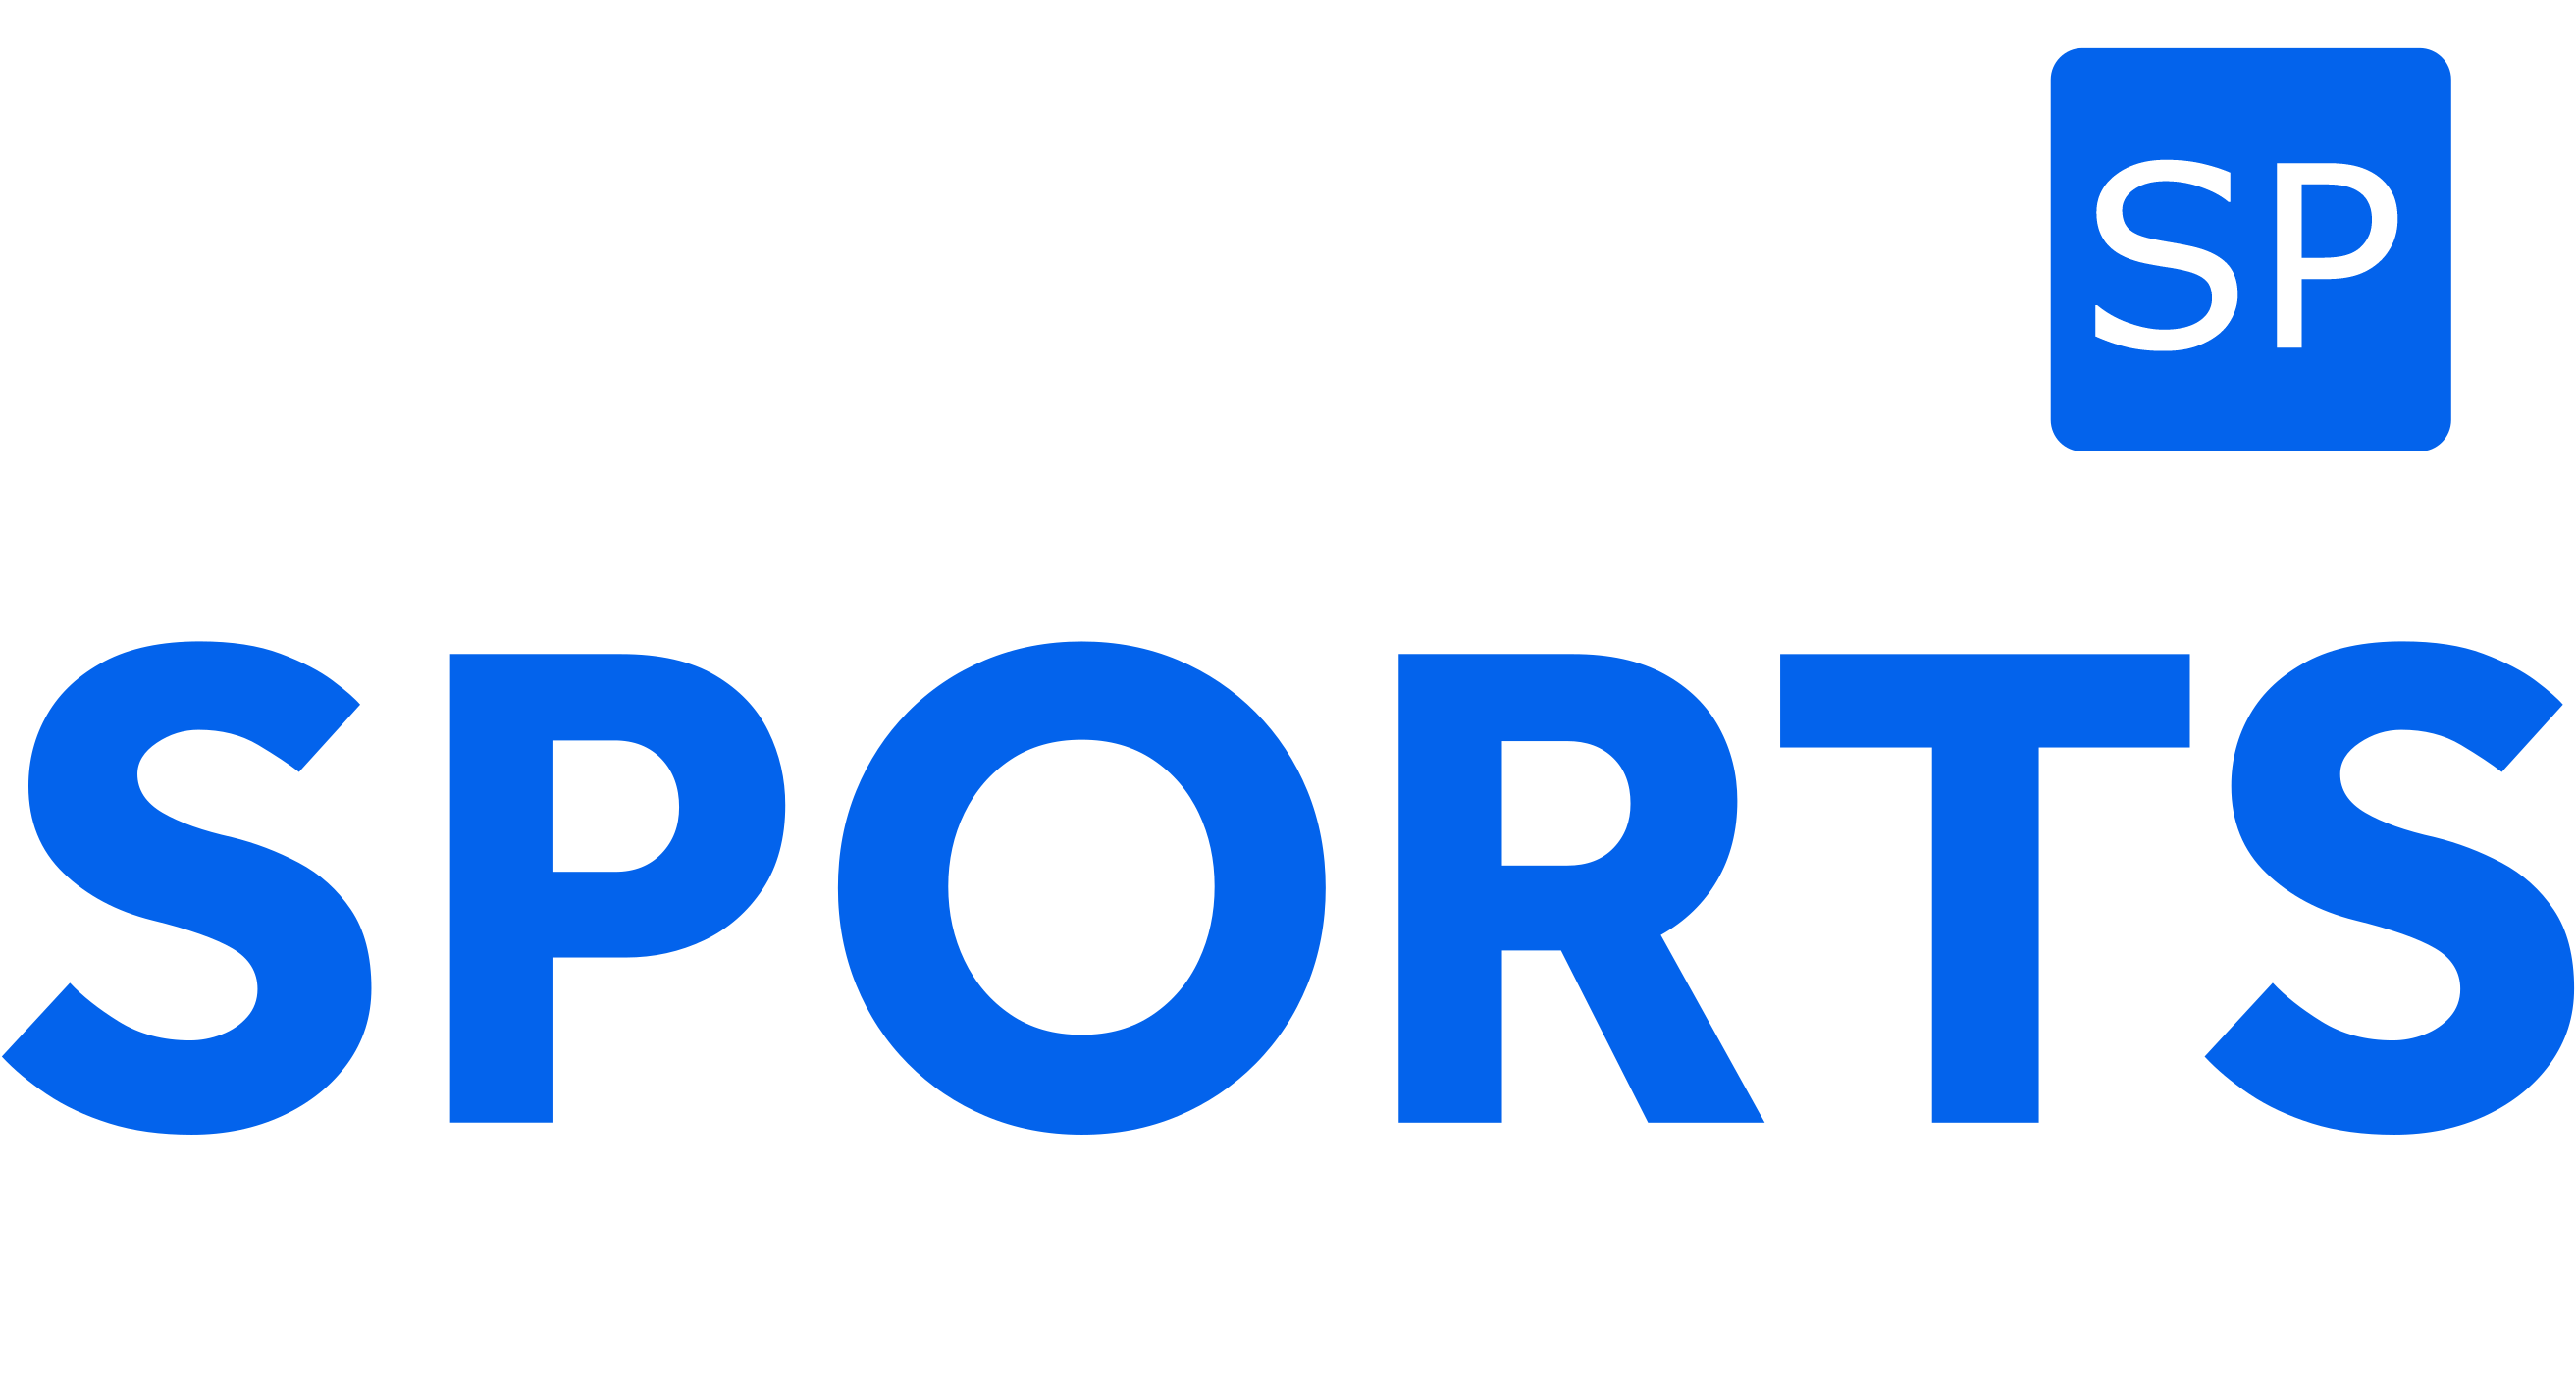 News Sports SP